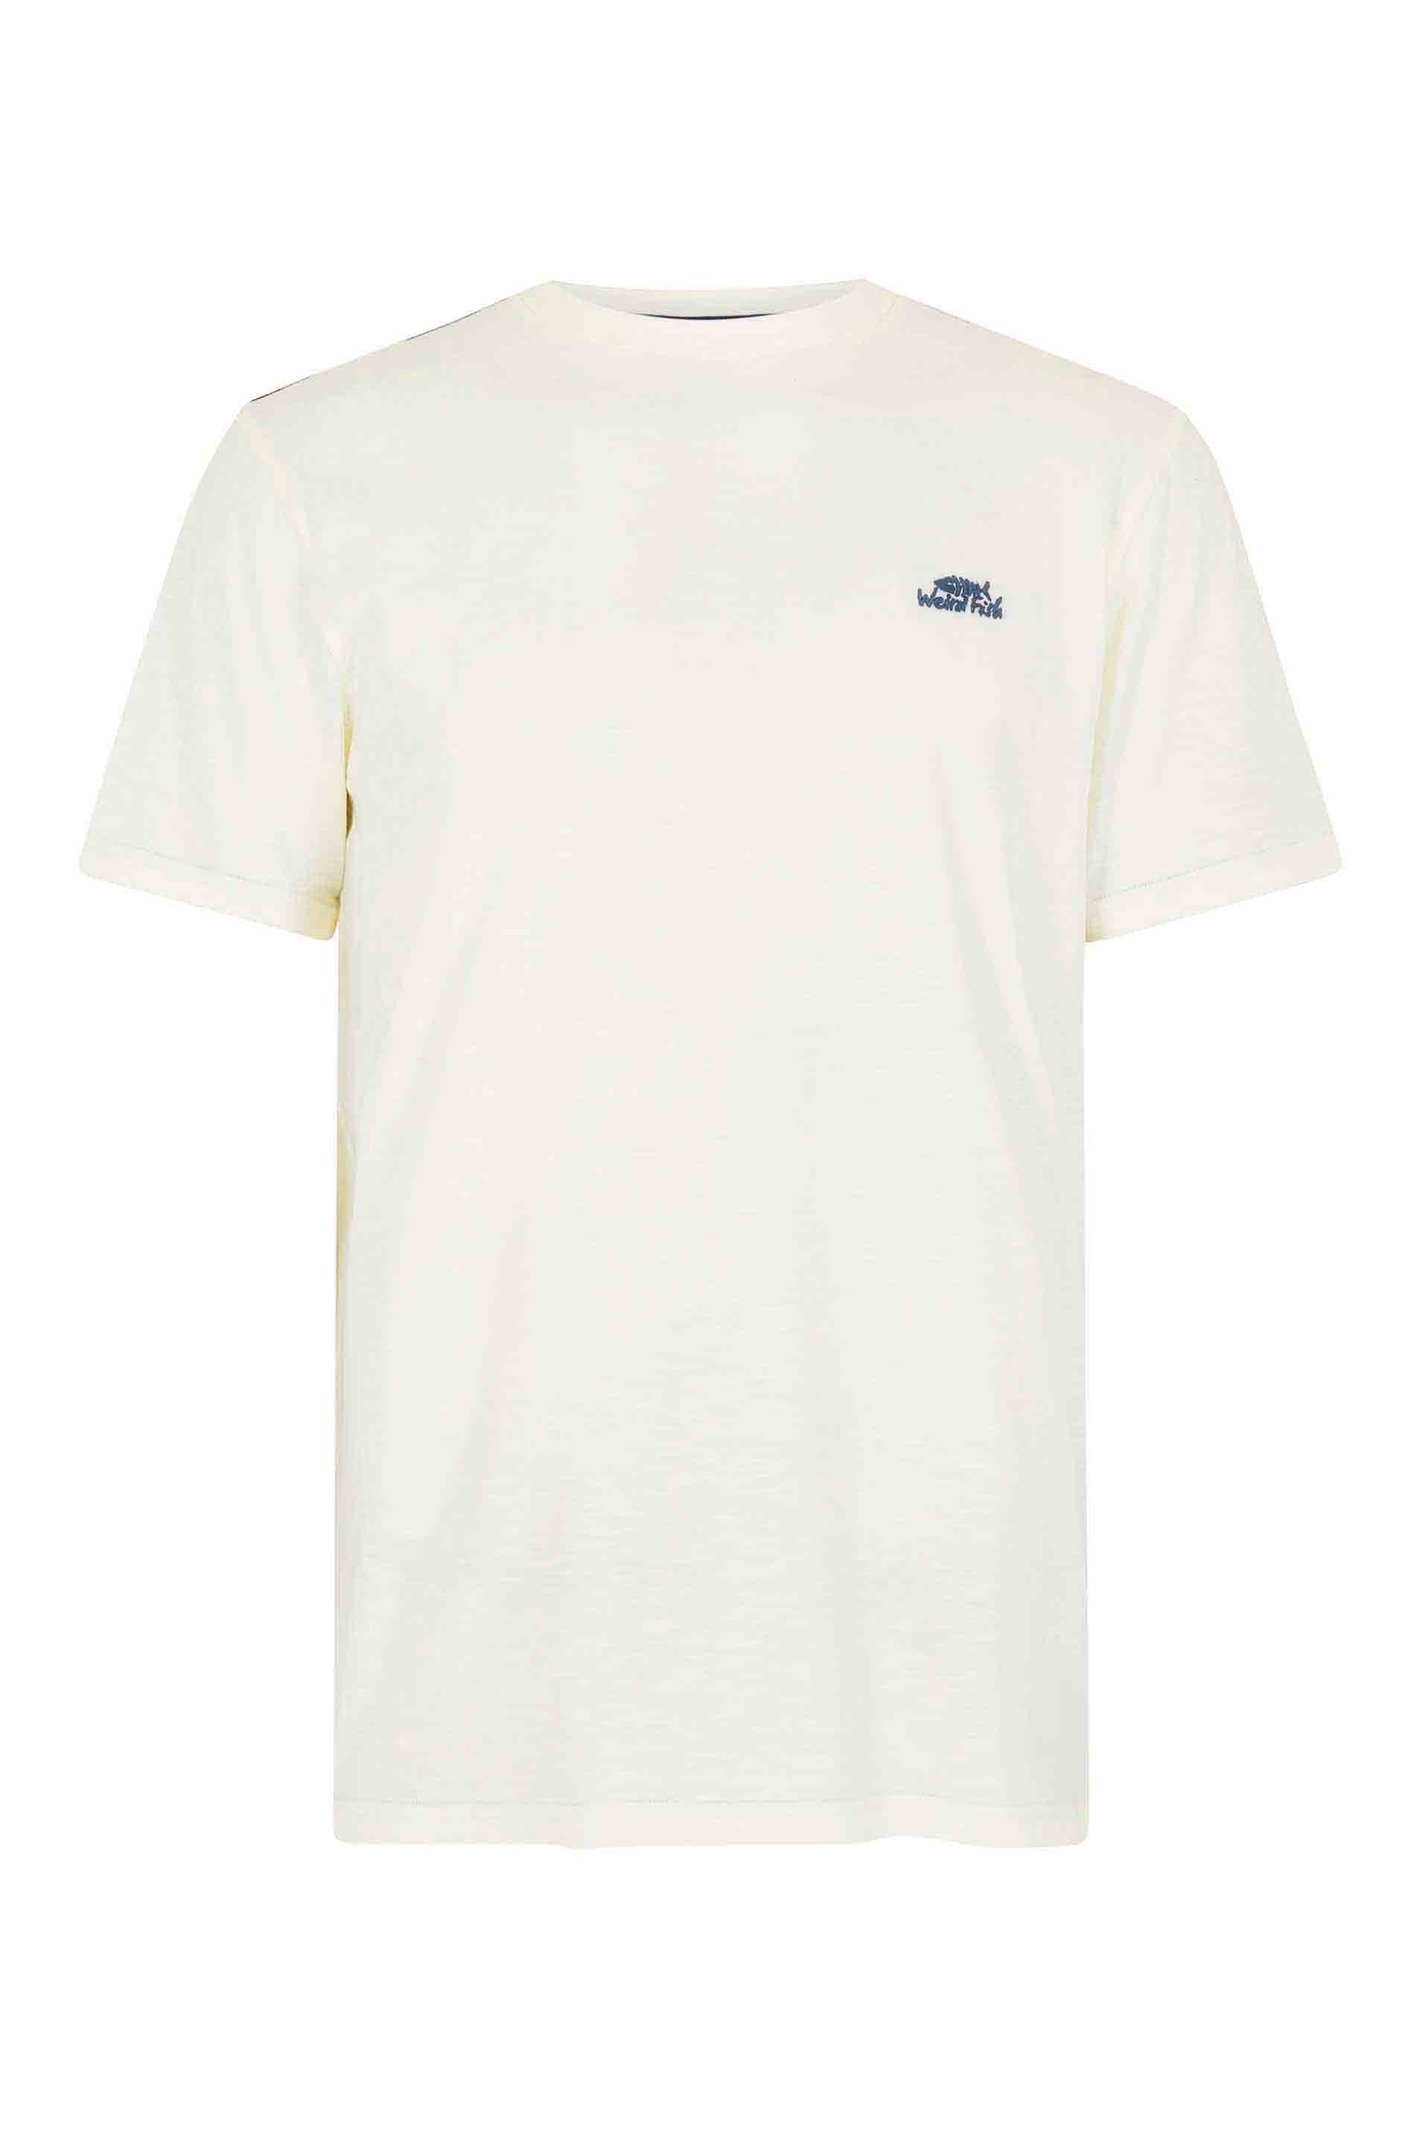 Weird Fish Fished Organic Cotton T-Shirt Dusty White Size M